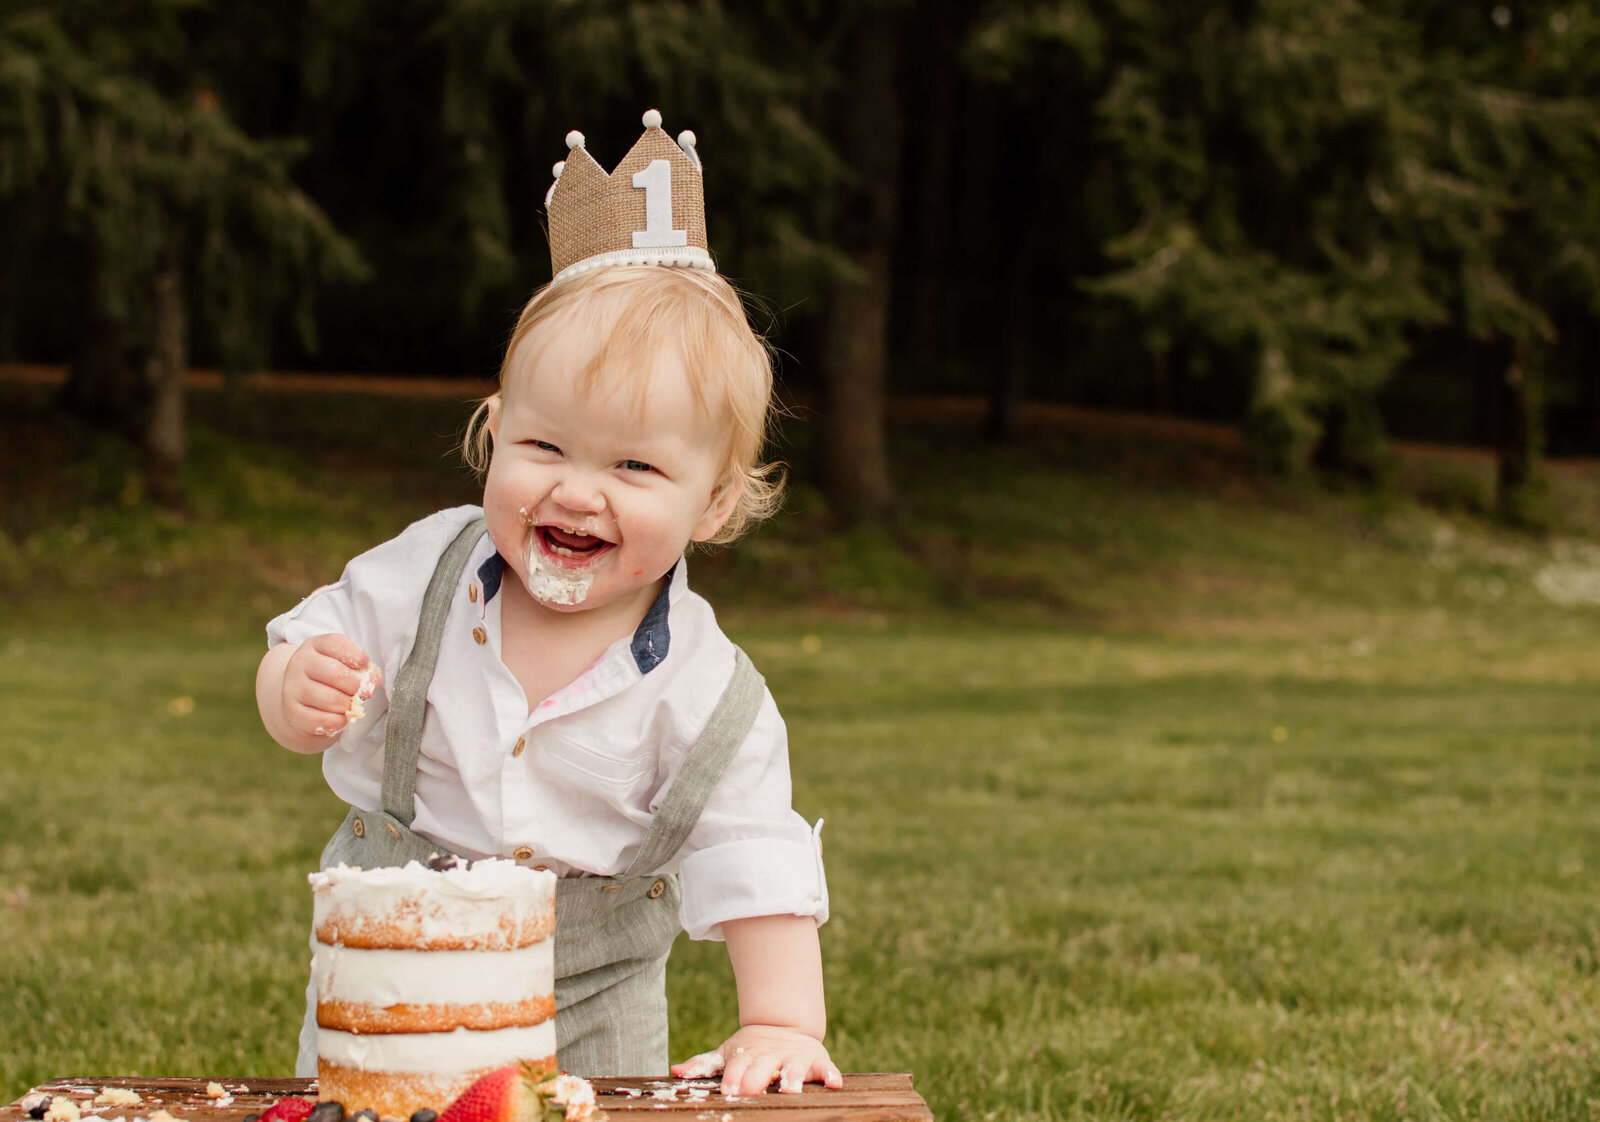 Little boy eating birthday cake.